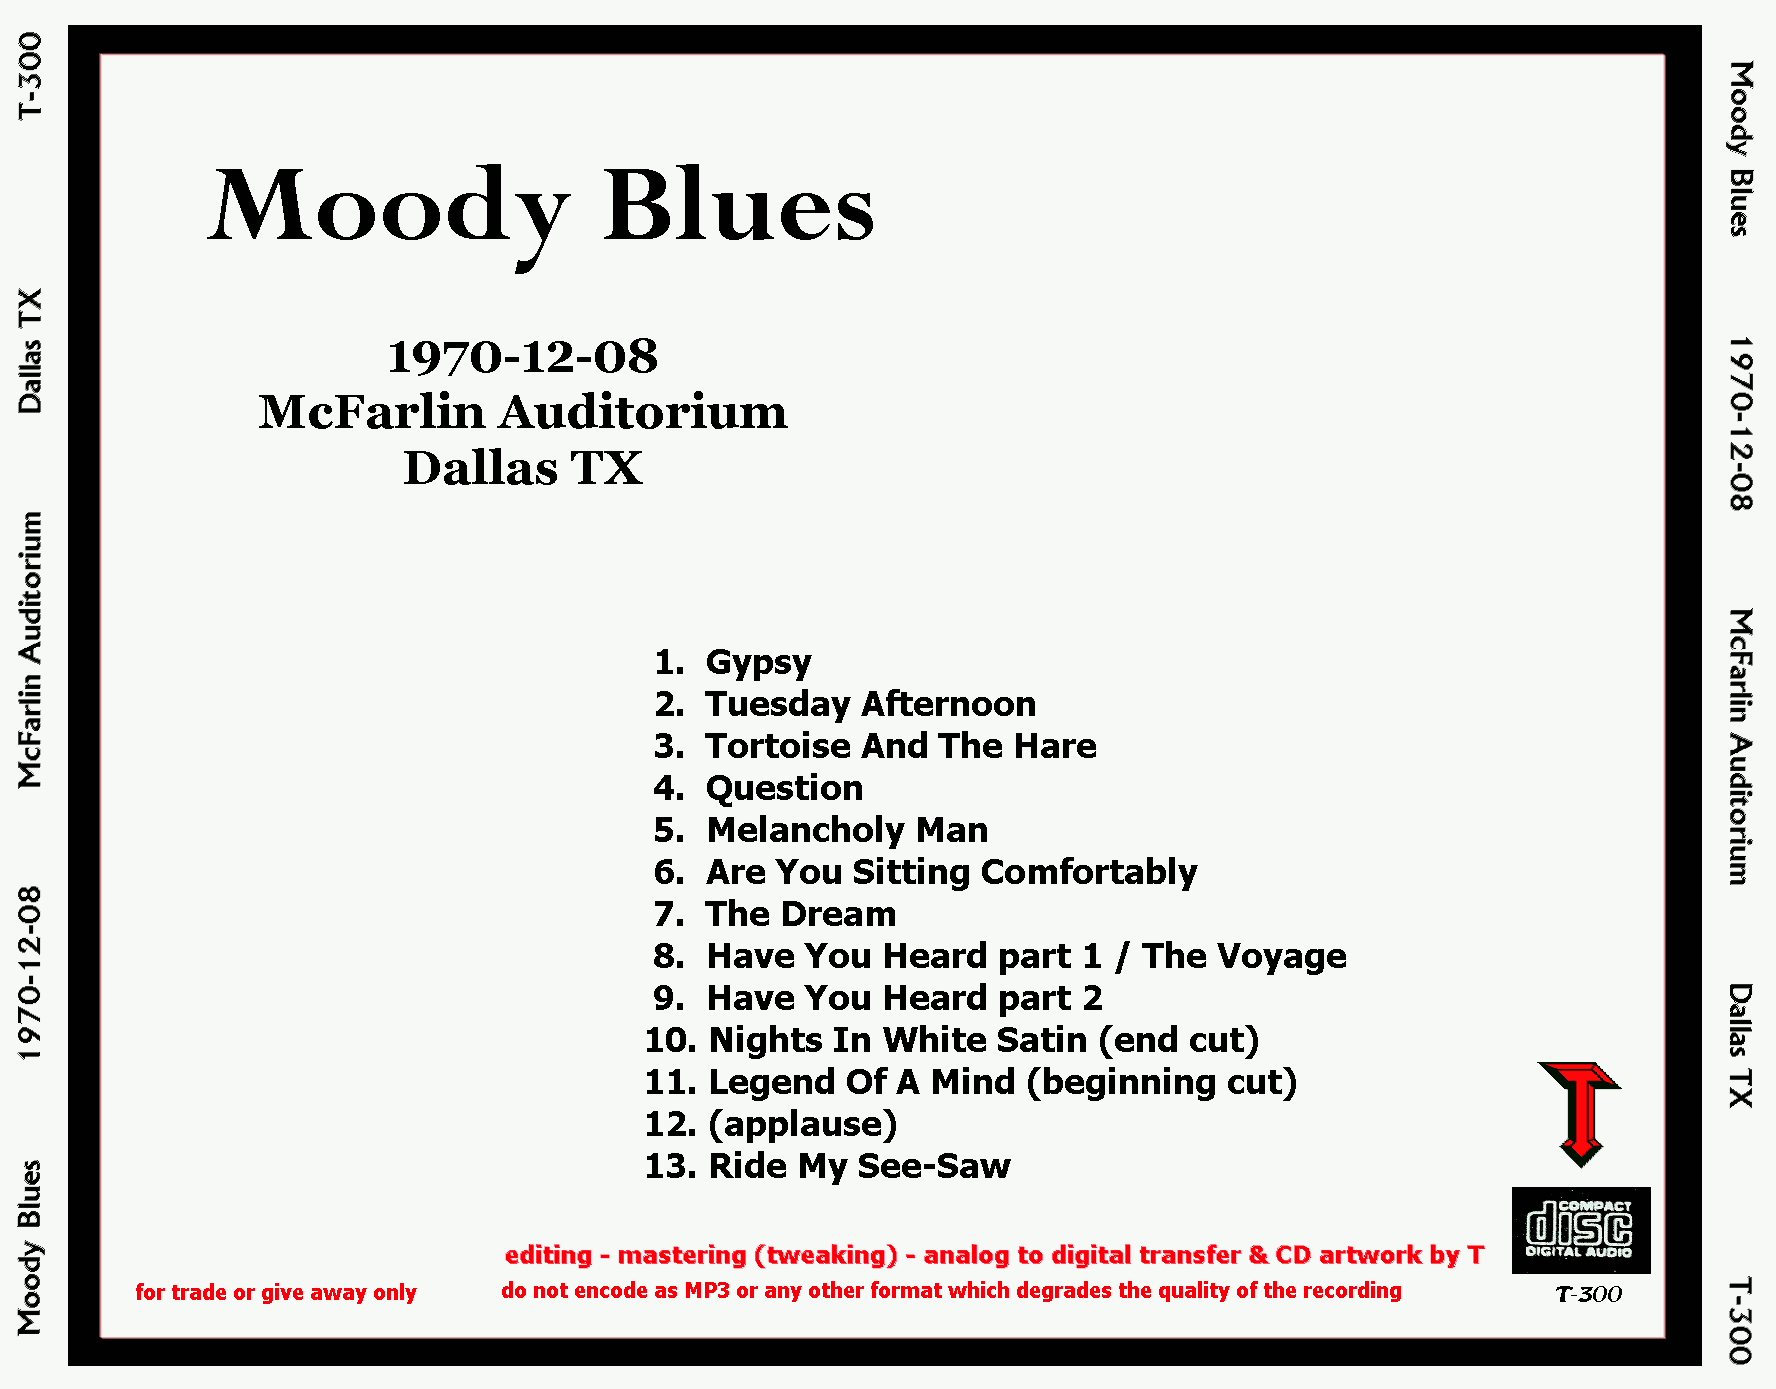 MoodyBlues1970-12-08McFarlinAuditoriumDallasTX (1).JPG